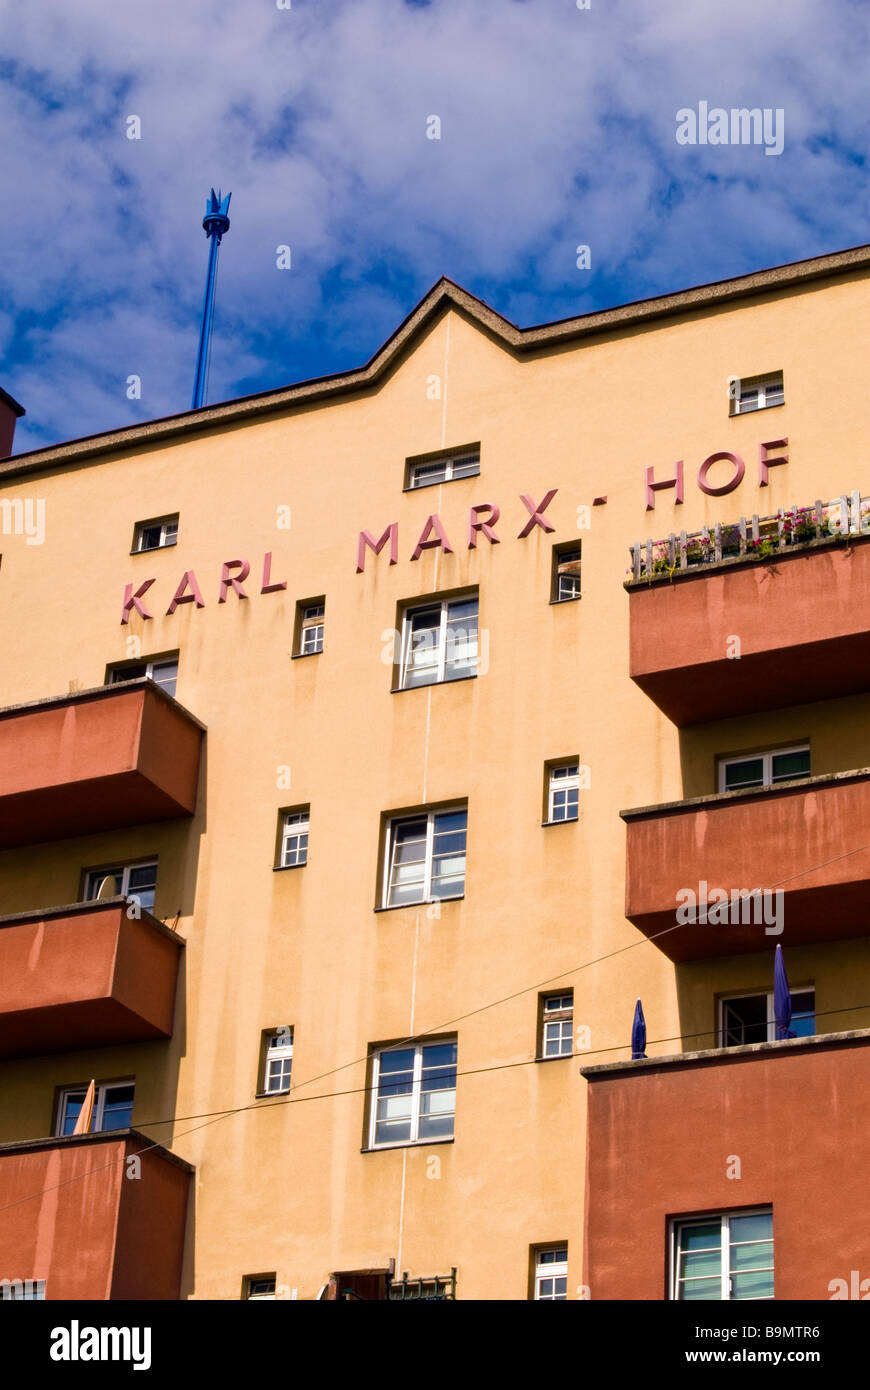 Karl Marx Hof building, Vienna, Austria Stock Photo